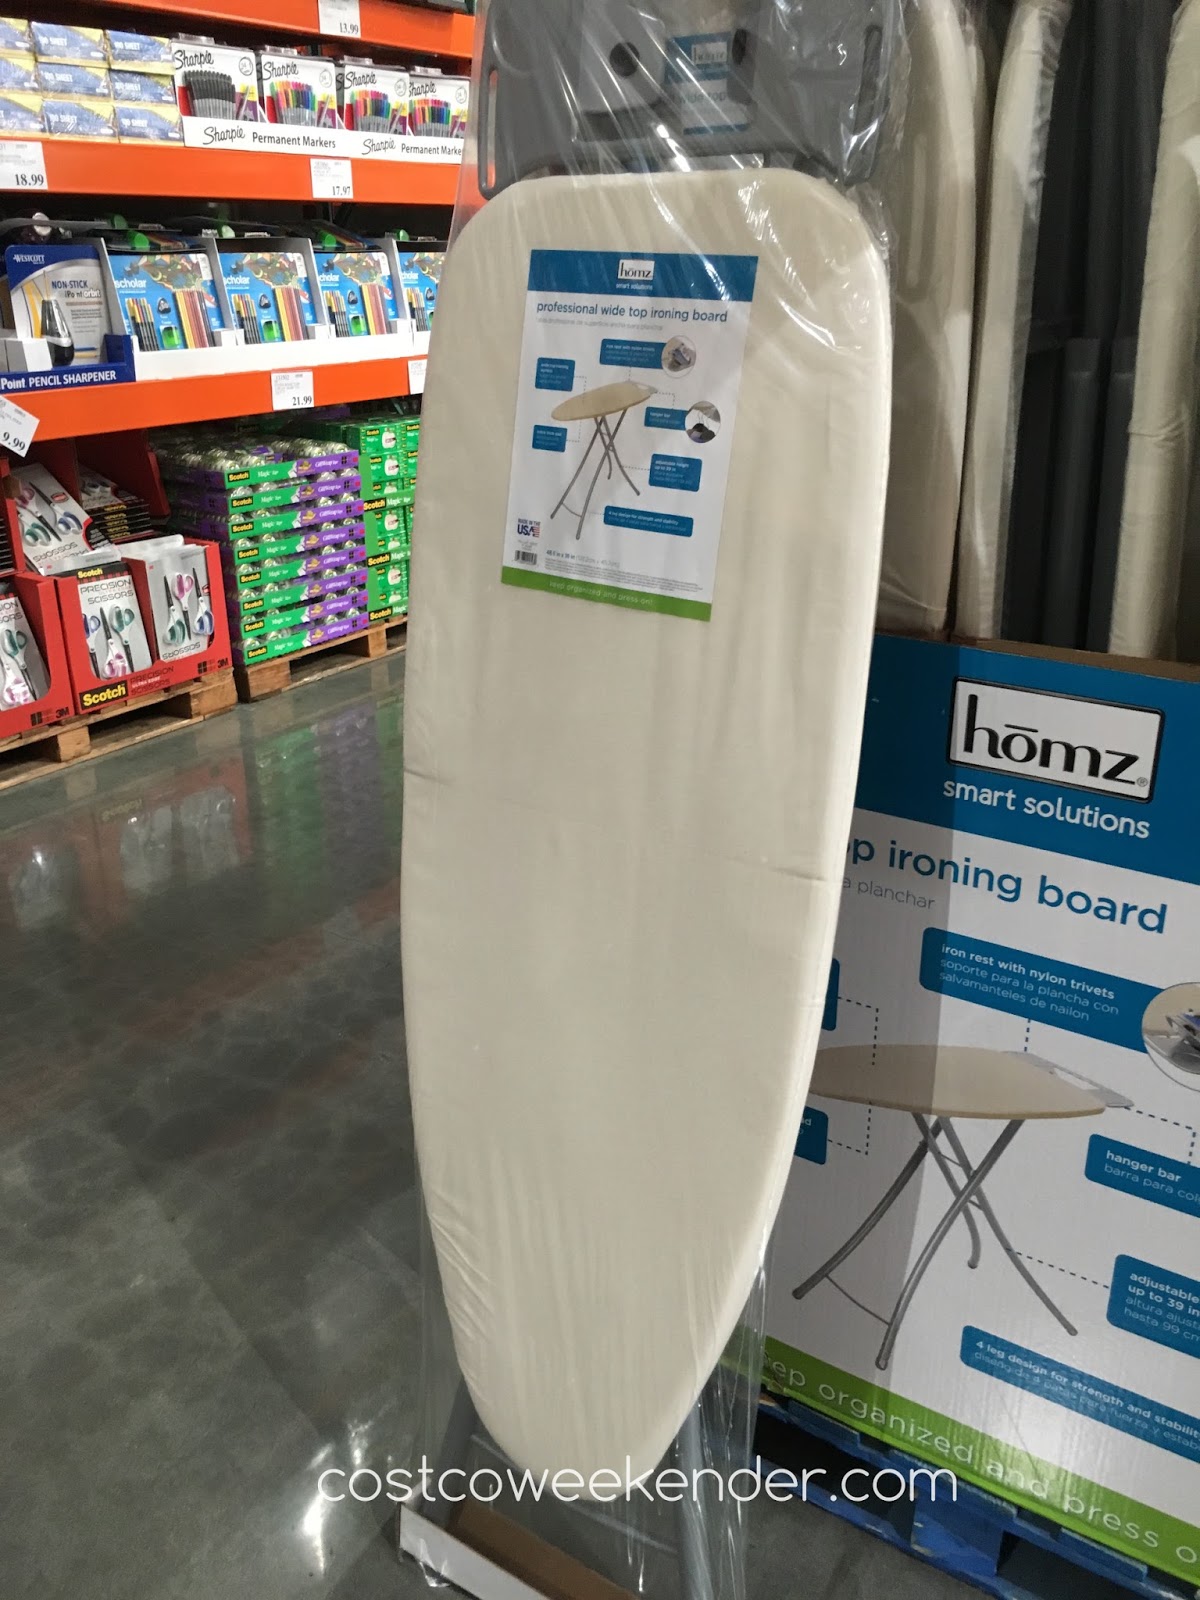 Homz Professional Wide Top Ironing Board | Costco Weekender